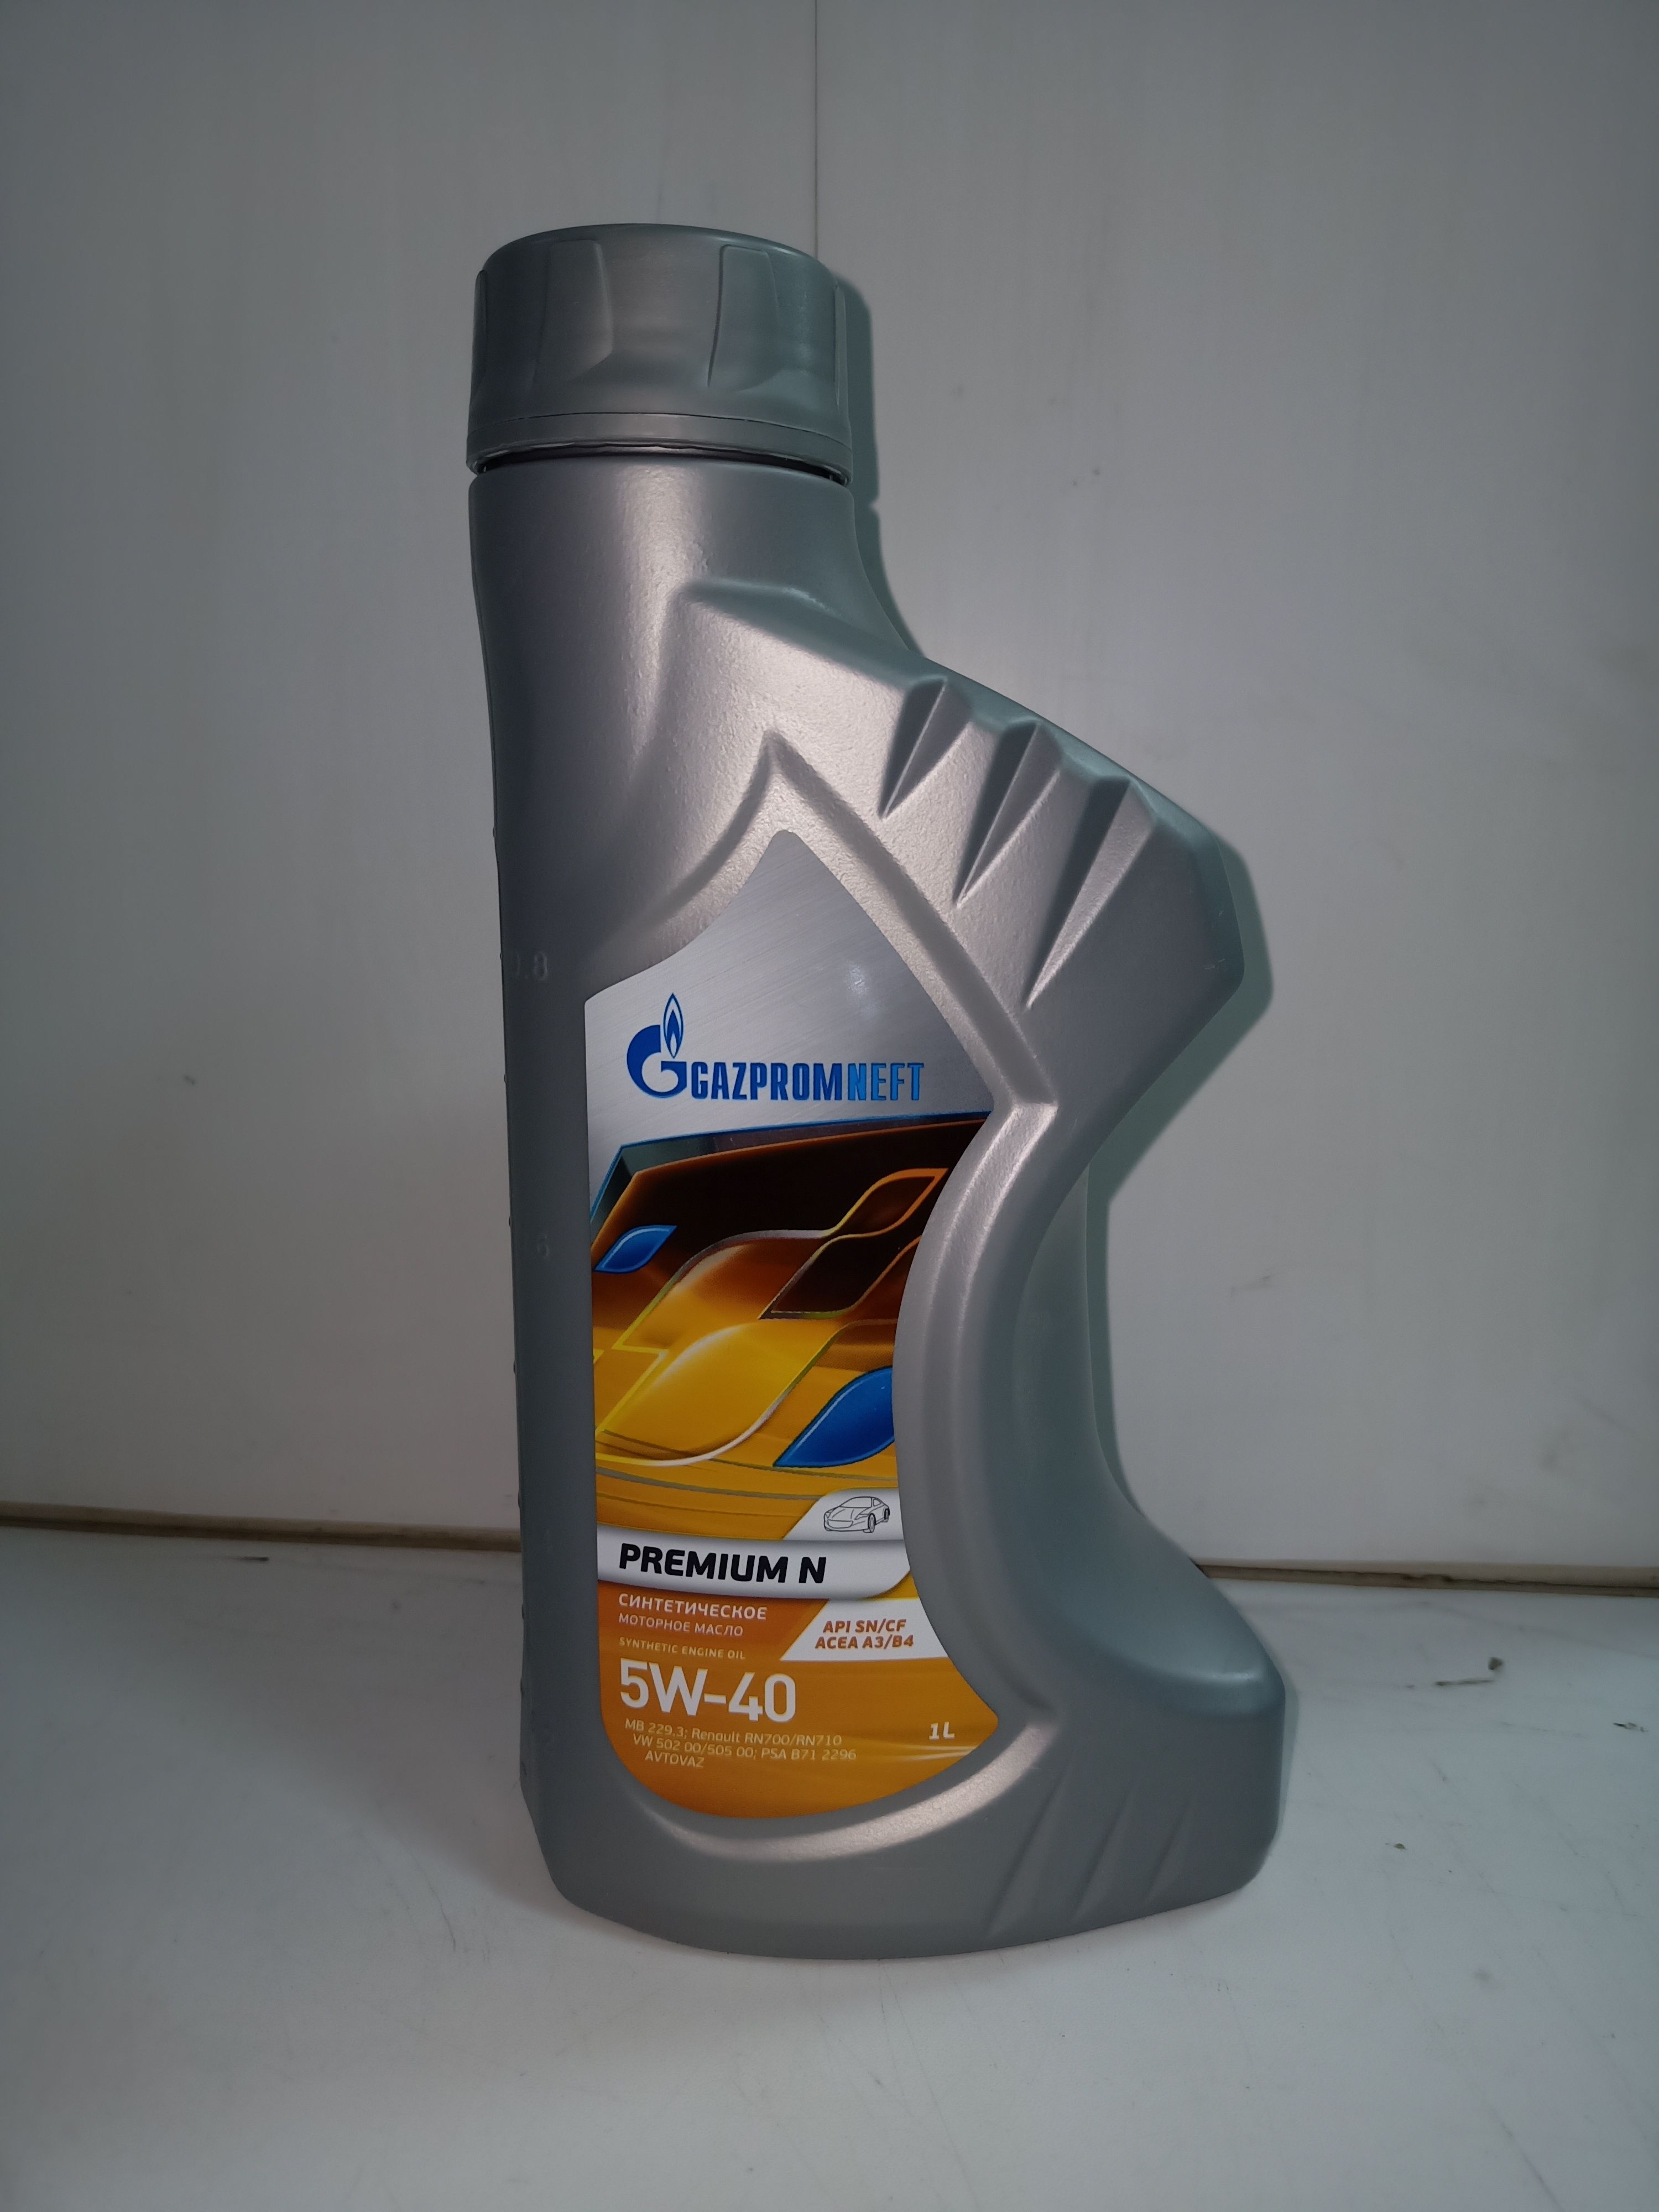 Масло газпромнефть 5w40 premium. Масло Газпромнефть 5w40 синтетика. Gazpromneft Premium n 5w-40.